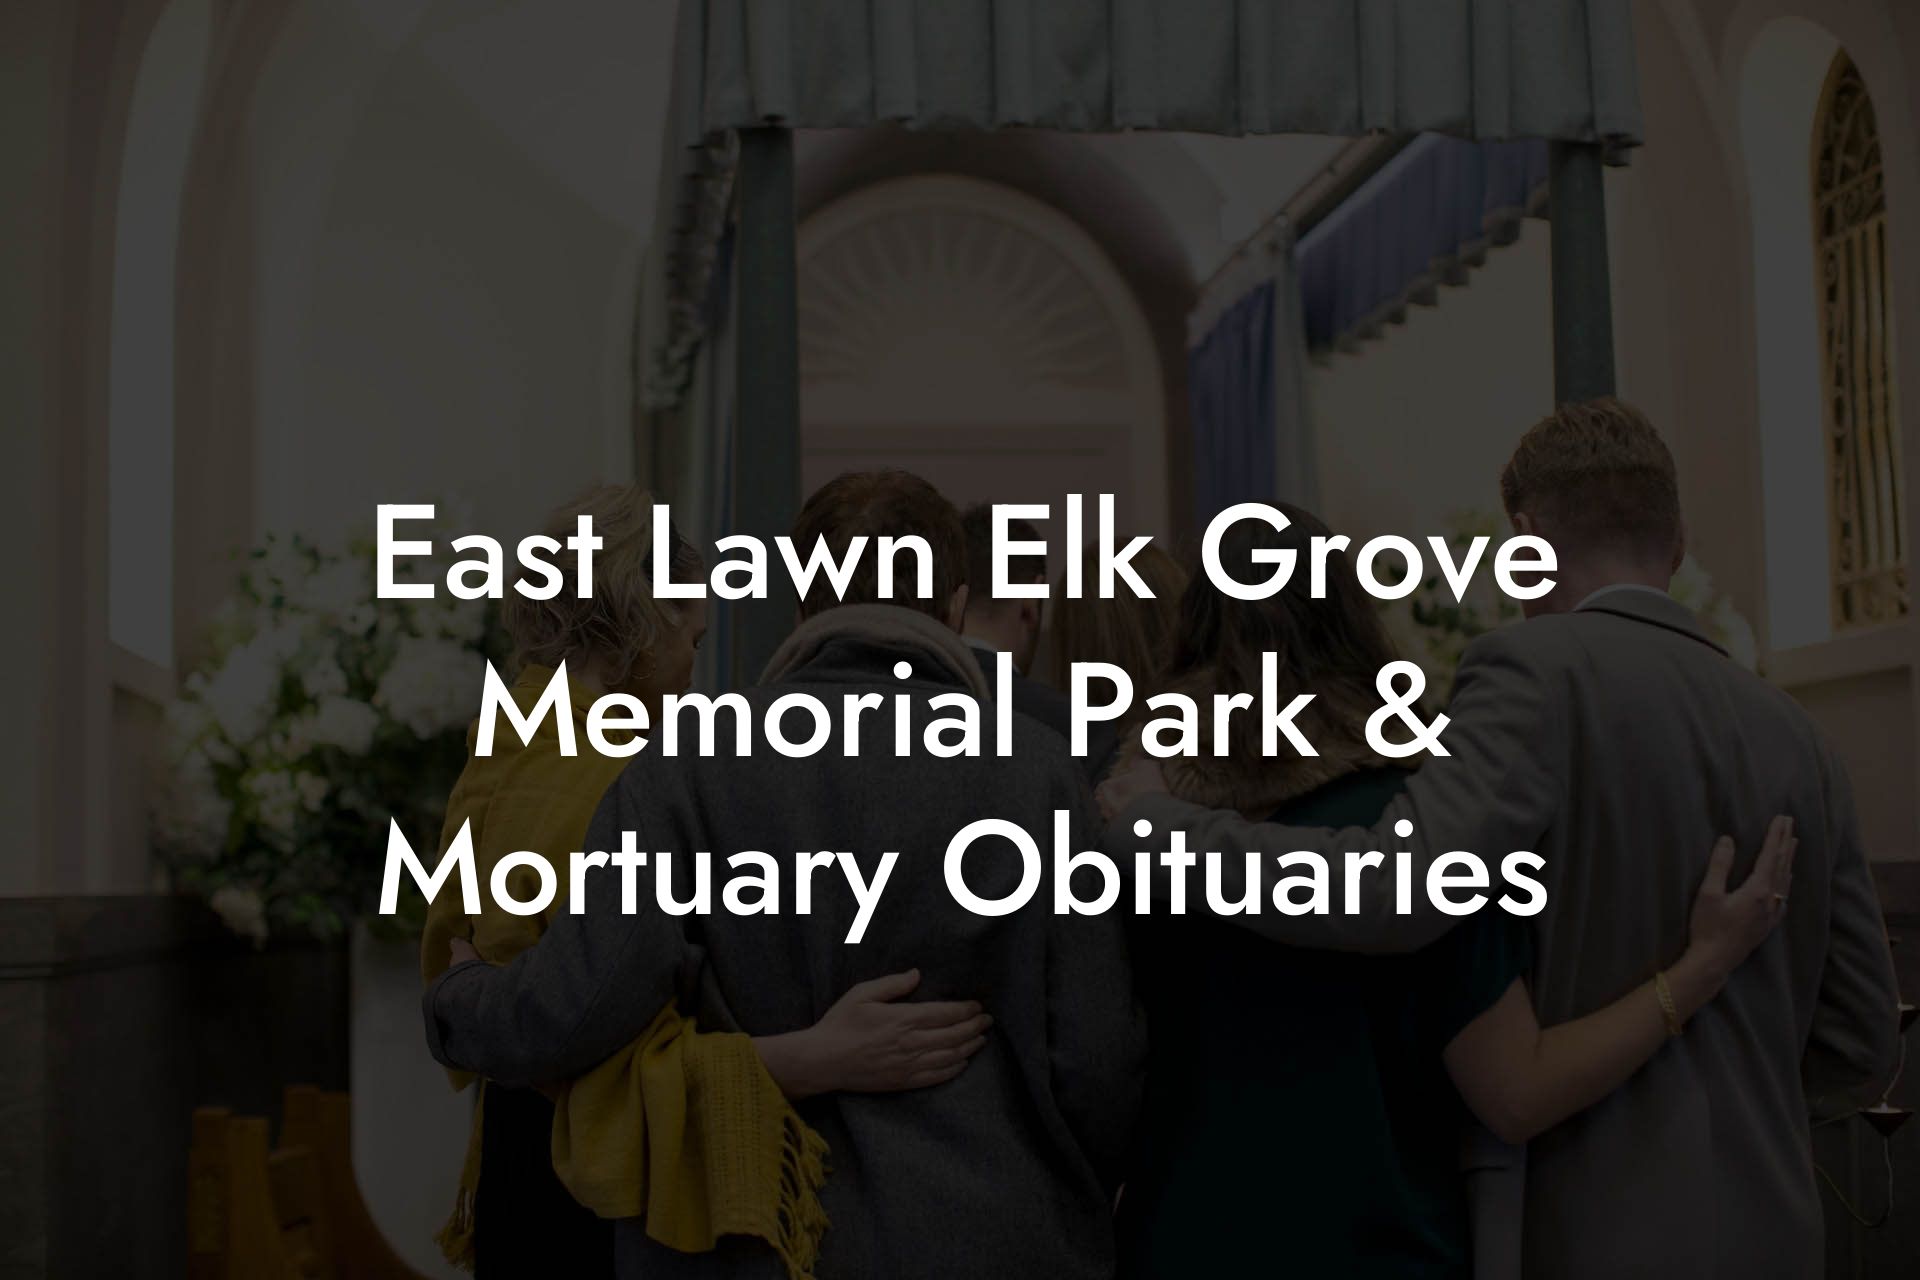 East Lawn Elk Grove Memorial Park & Mortuary Obituaries